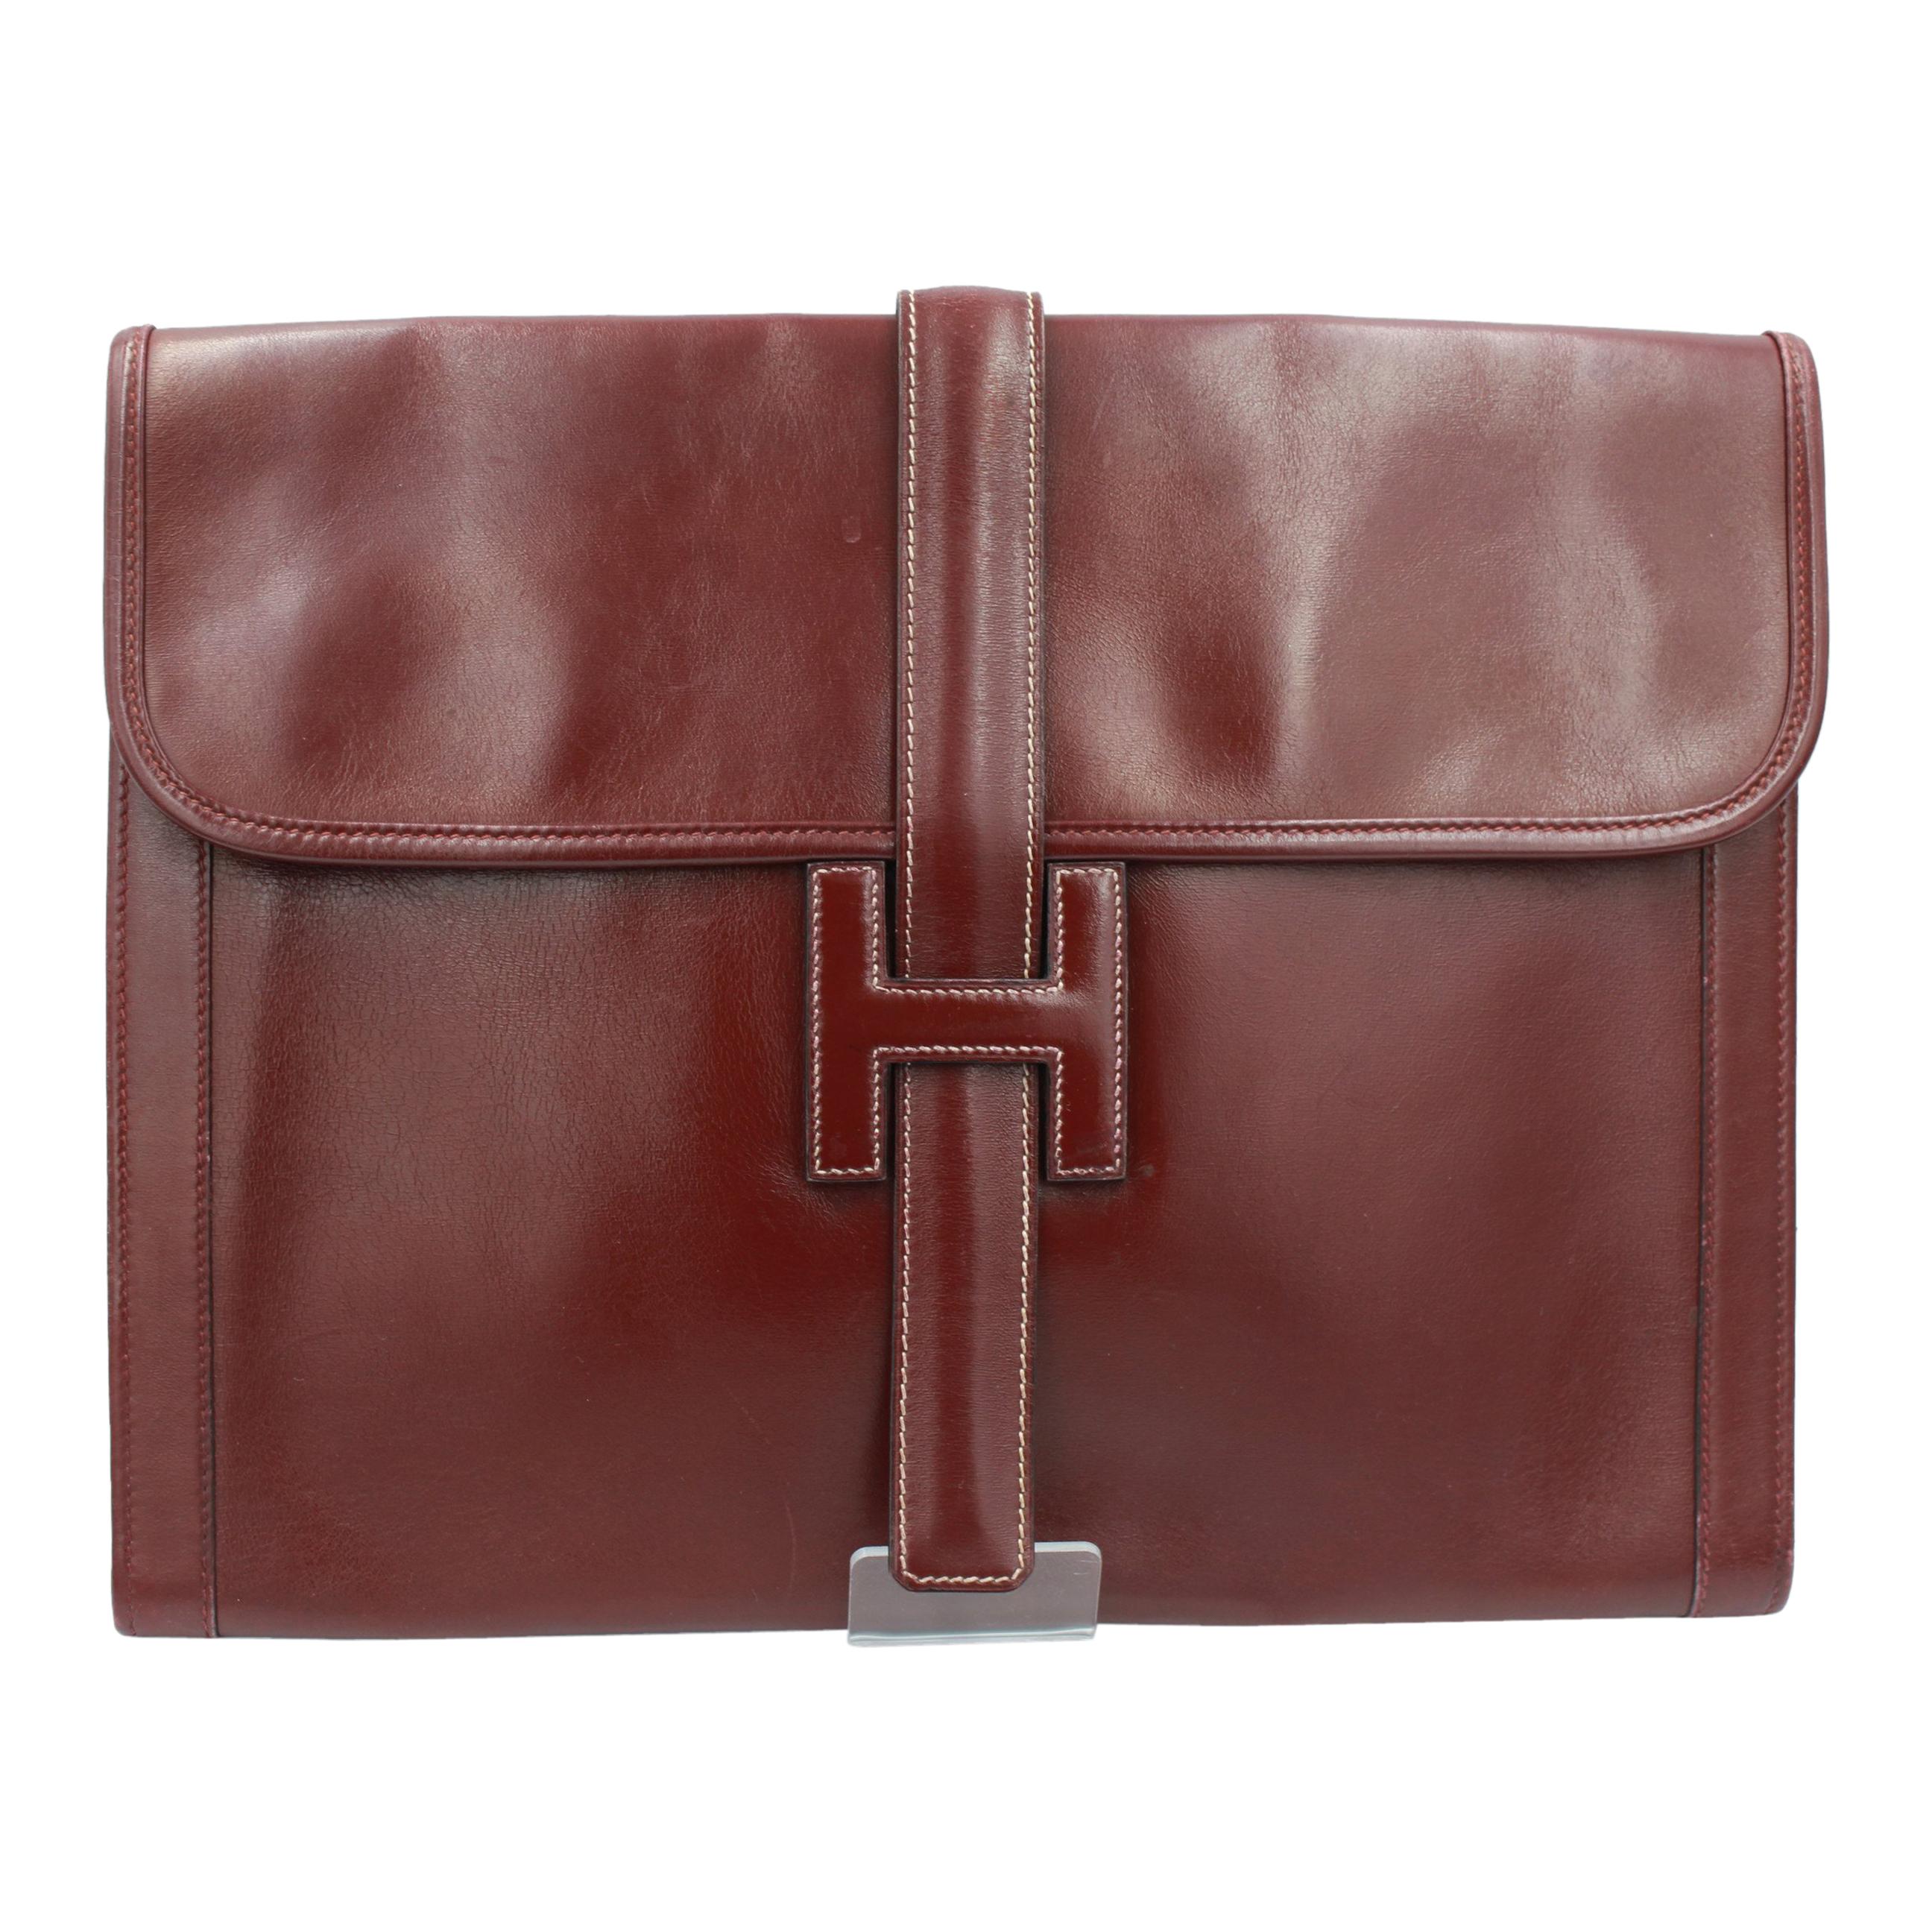 Vintage Hermes Jige GM  Clutch in Burgundy box Leather.